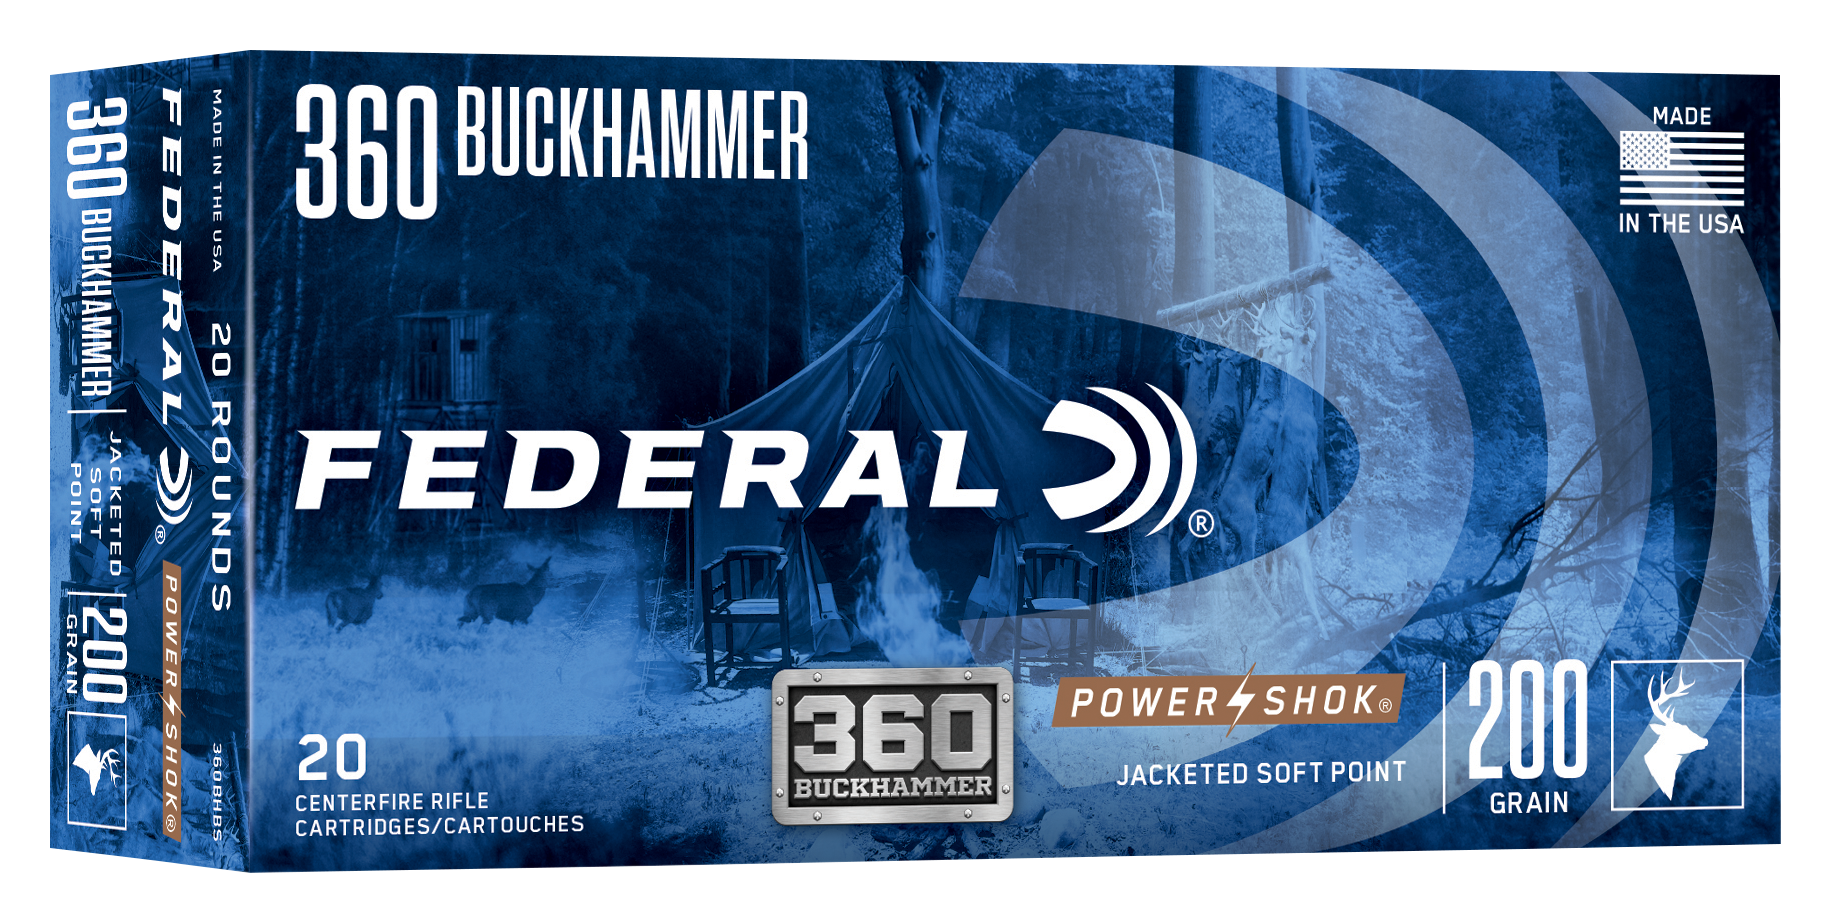 Federal Premium .360 Buckhammer 200 Grain Power-Shok Centerfire Rifle Ammo